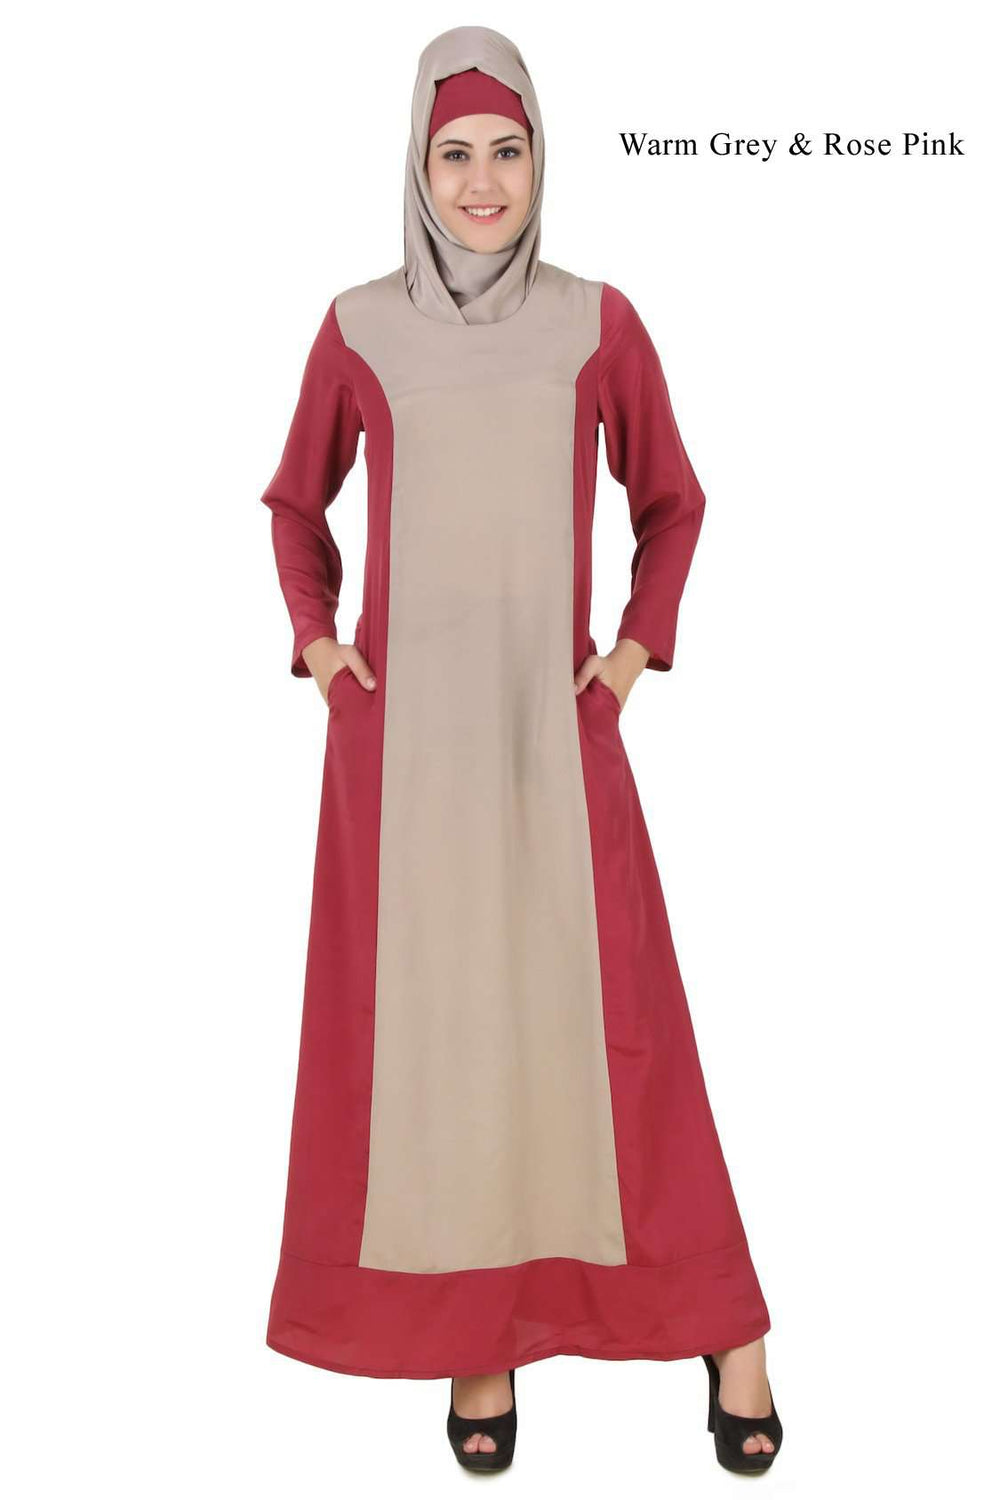 Arshi Slim Look Rose Pink & Warm Grey Abaya Front